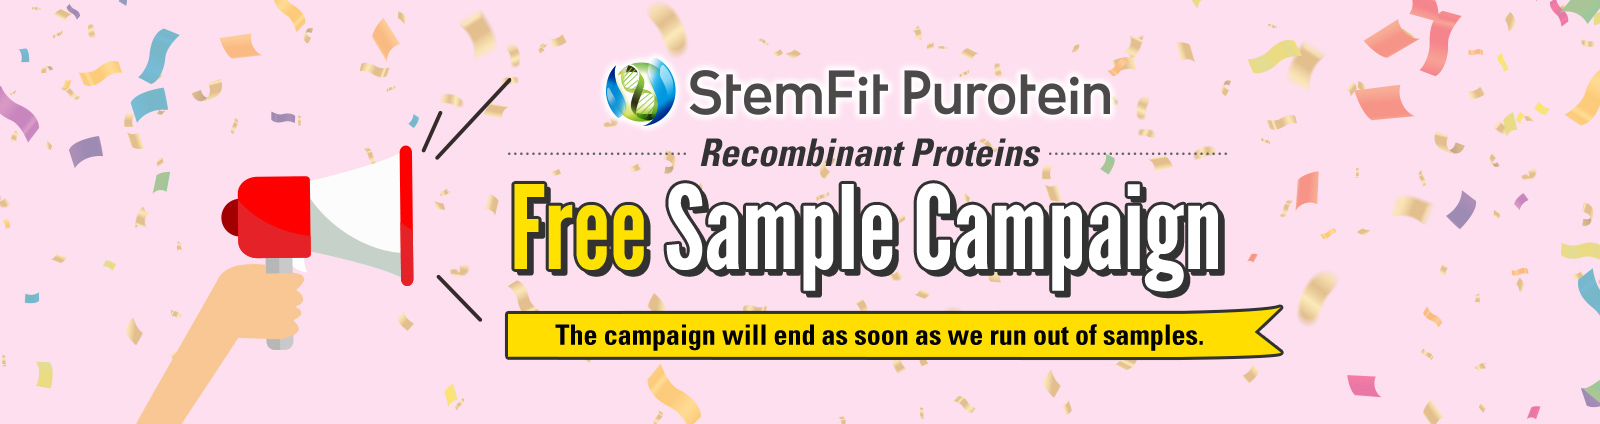 StemFit Purotein Free Sample Campaign 2021.8 - 2021.10